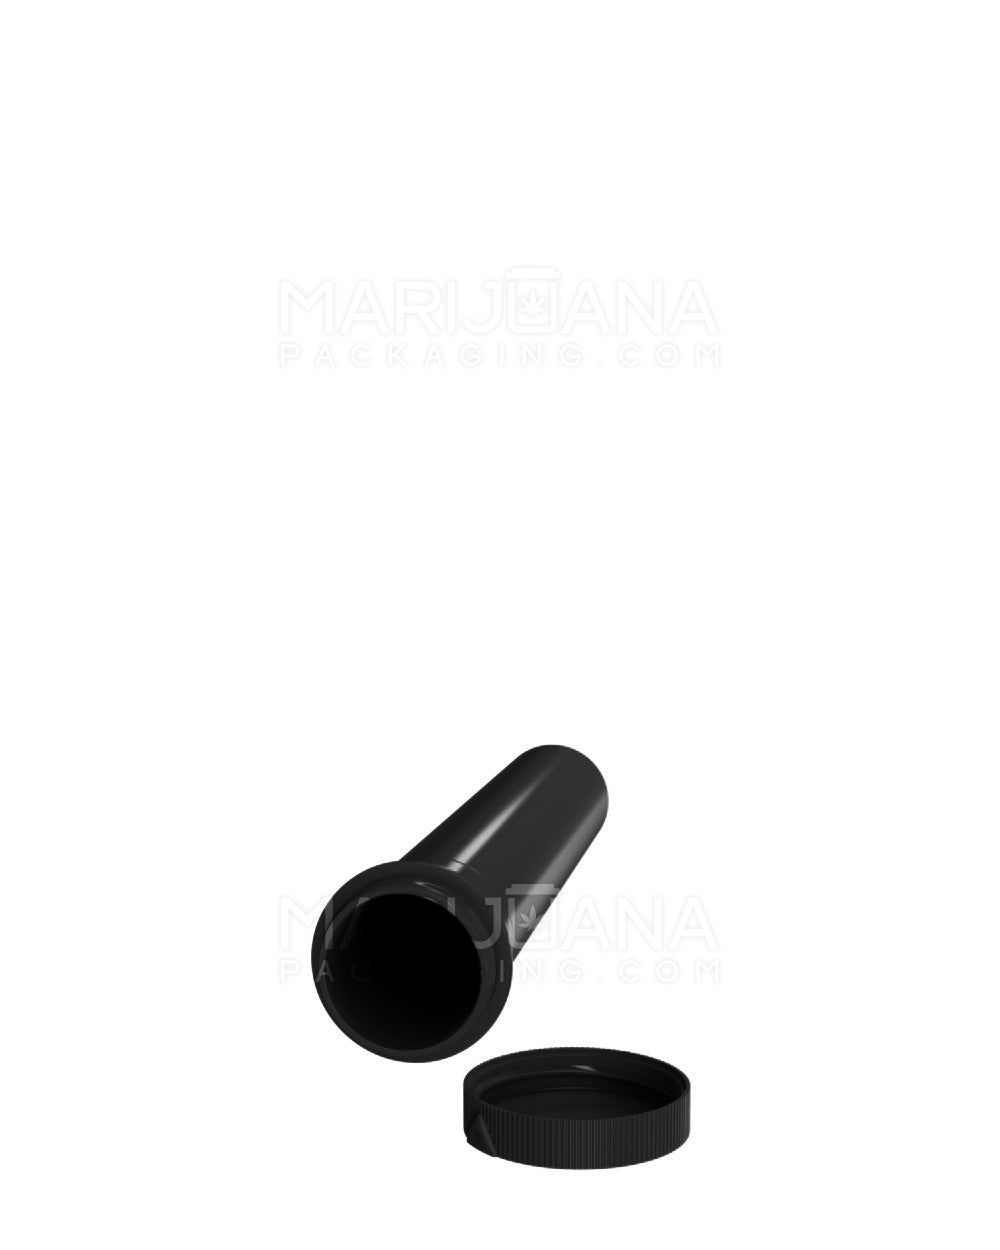 Child Resistant | ‘Line-Up Arrow’ Pre-Roll Tubes | 94mm - Opaque Black Plastic - 750 Count - 5